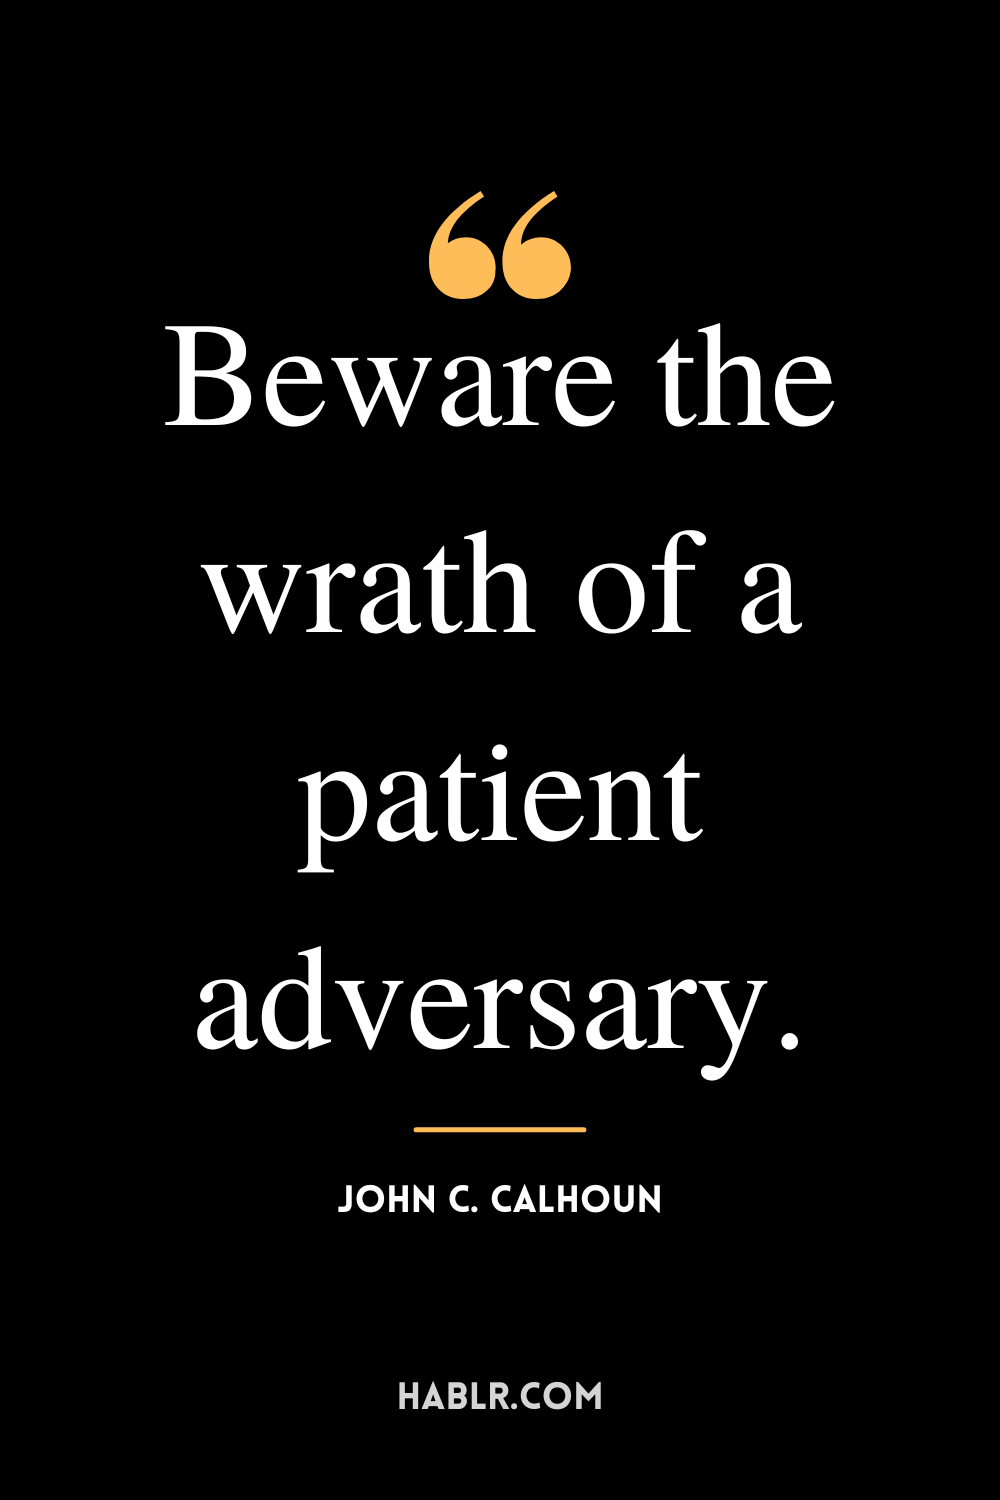 “Beware the wrath of a patient adversary.” -John C. Calhoun